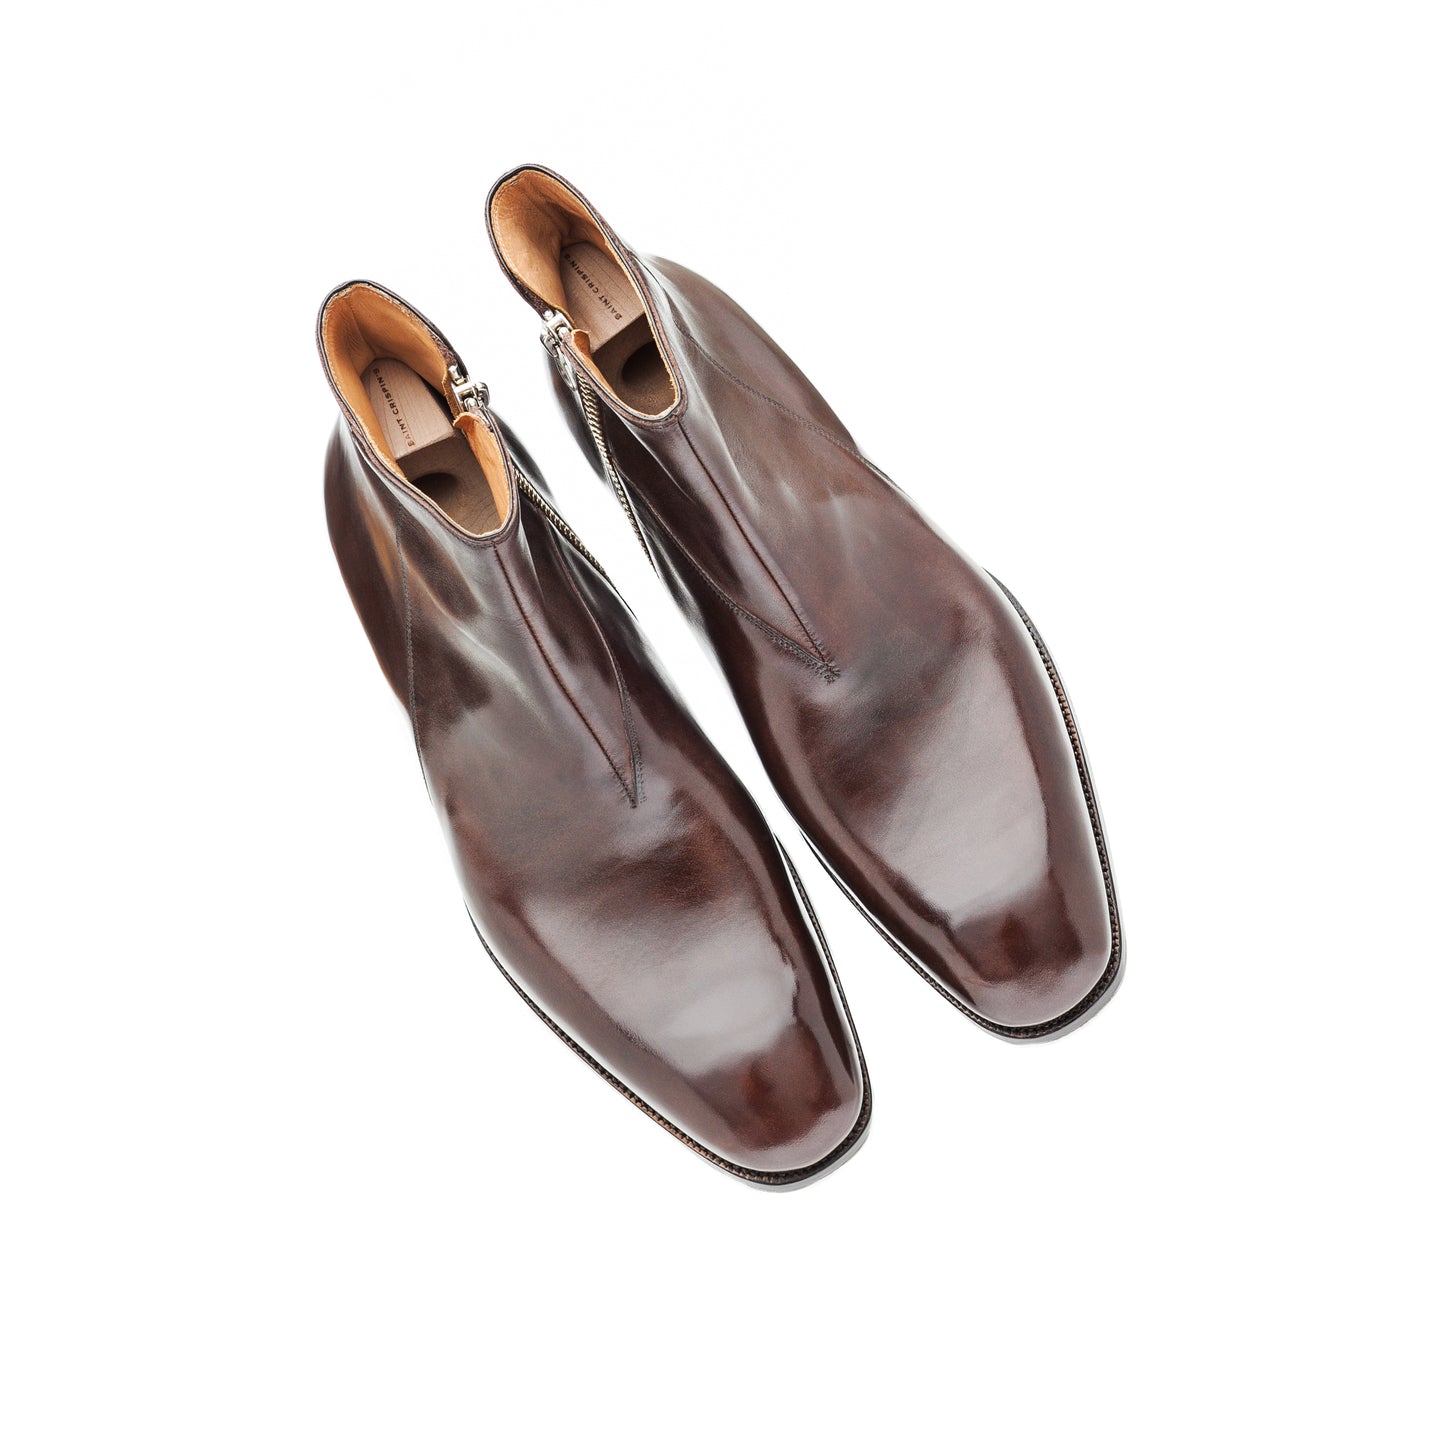 Plain boot with zipper in dark brown Espresso calf leather